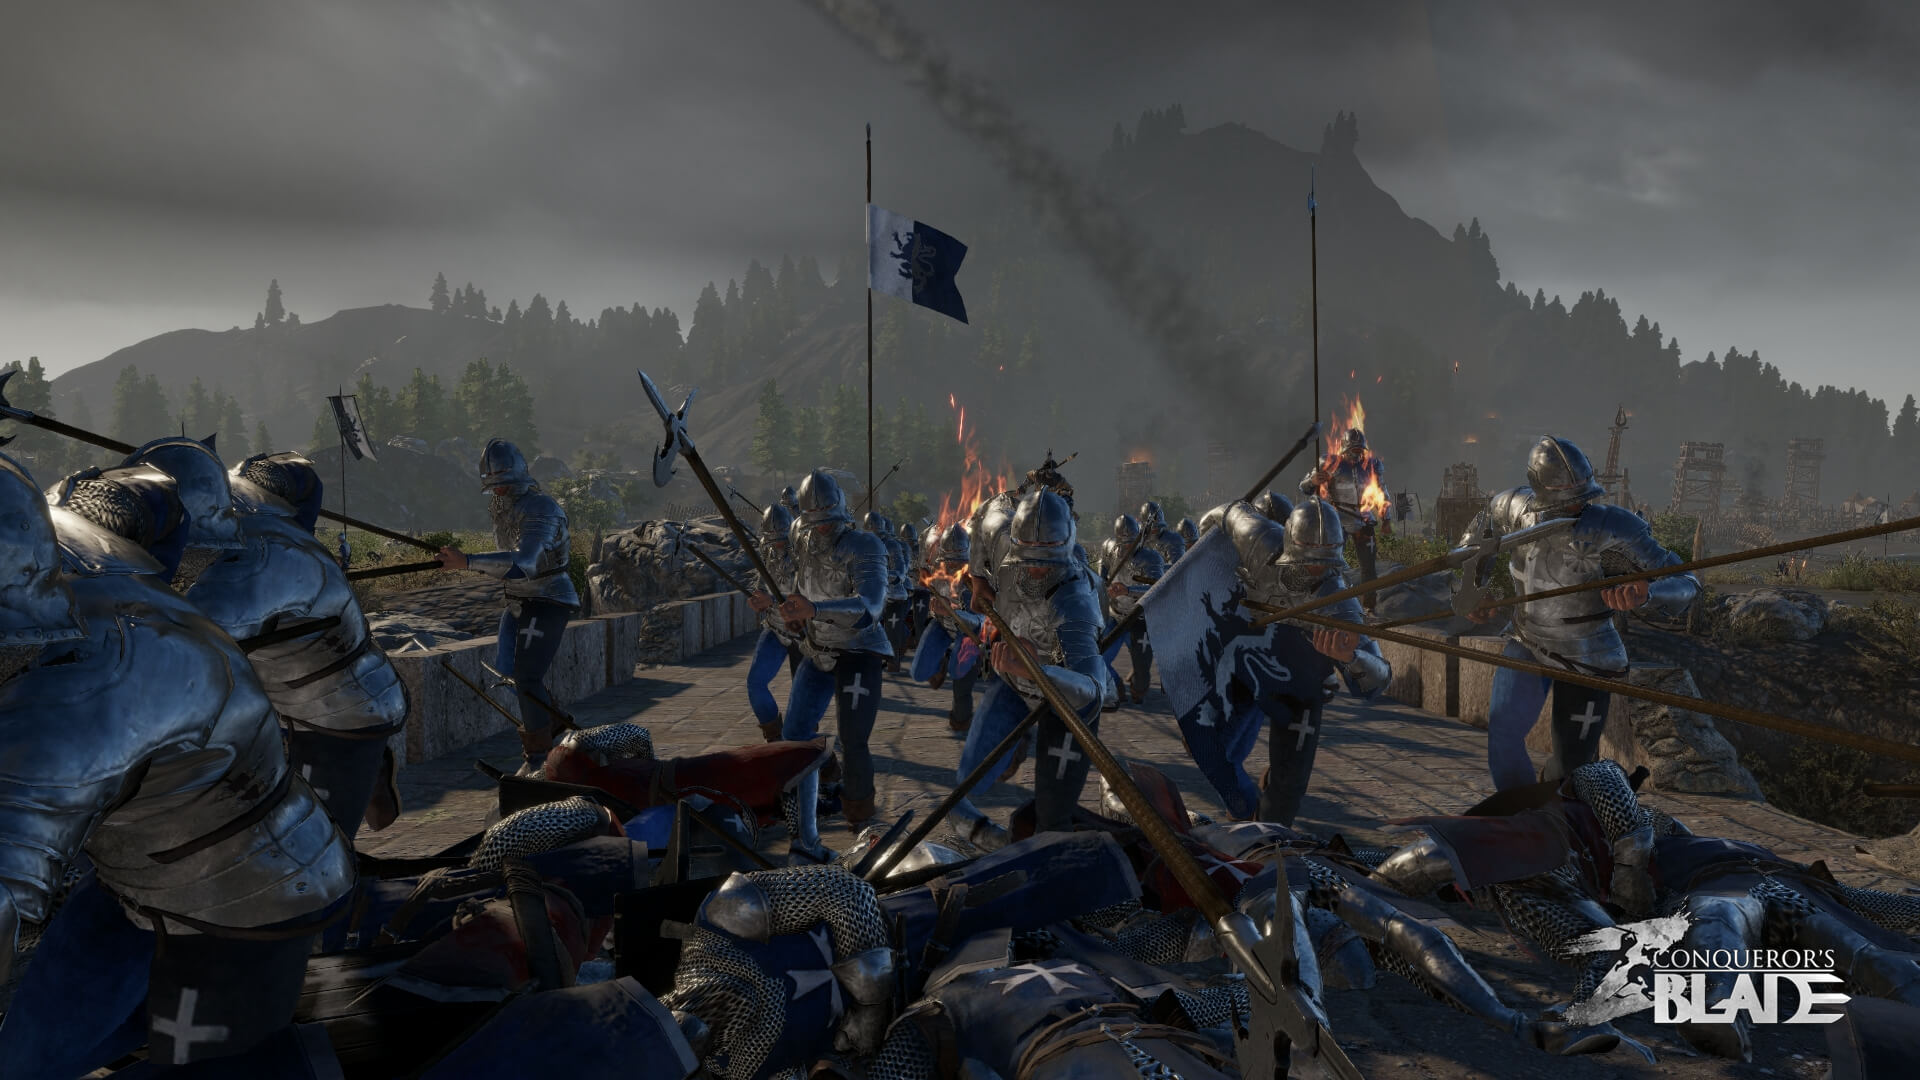 Conquerors-blade-screenshot-01